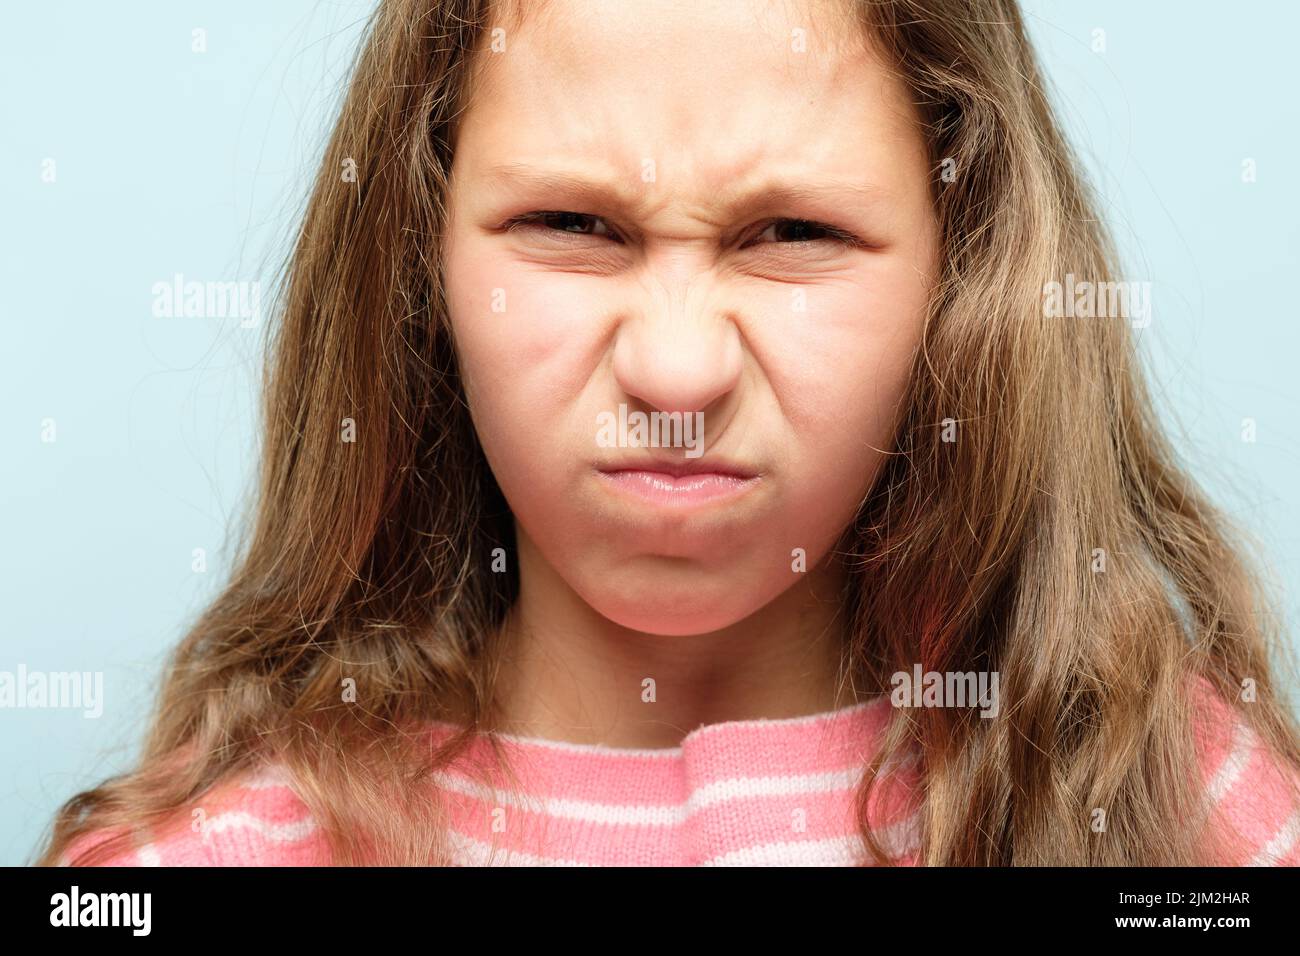 dislike unimpressed girl grimace wrinkle nose Stock Photo